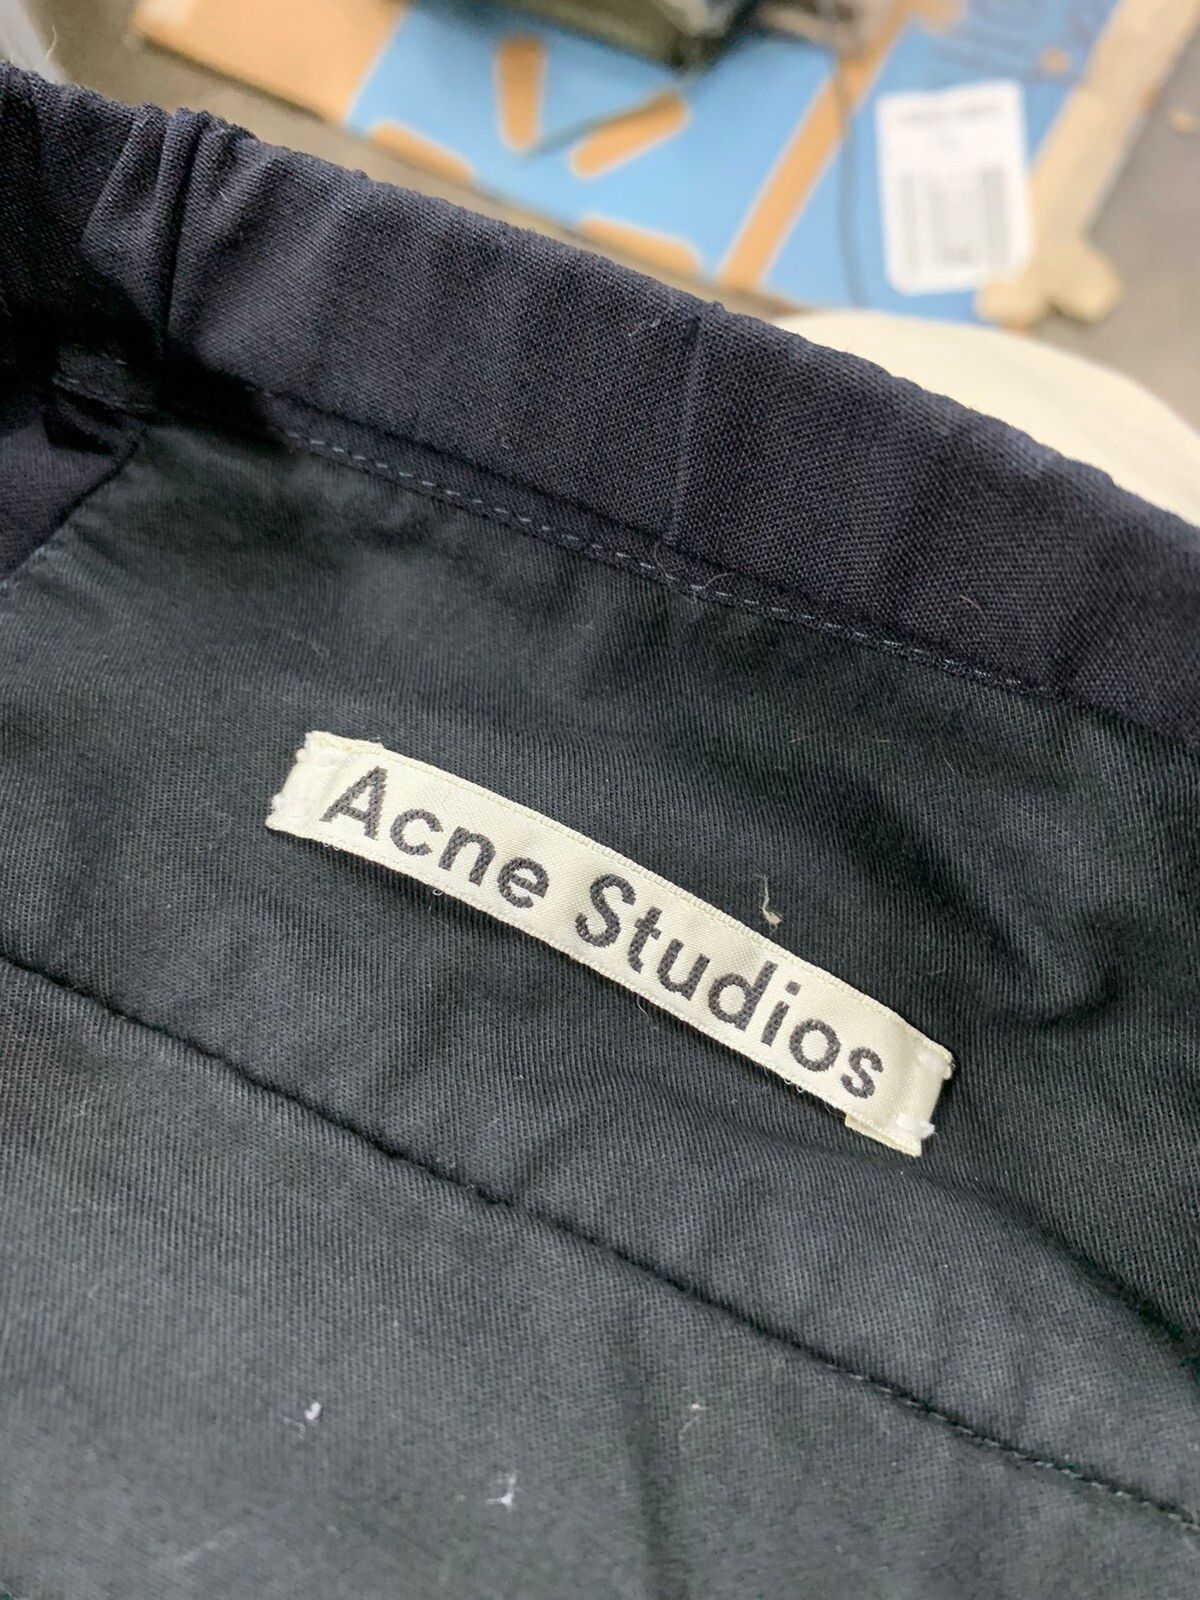 Acne Studios Acne Studios Slack Pants Size US 30 / EU 46 - 4 Thumbnail